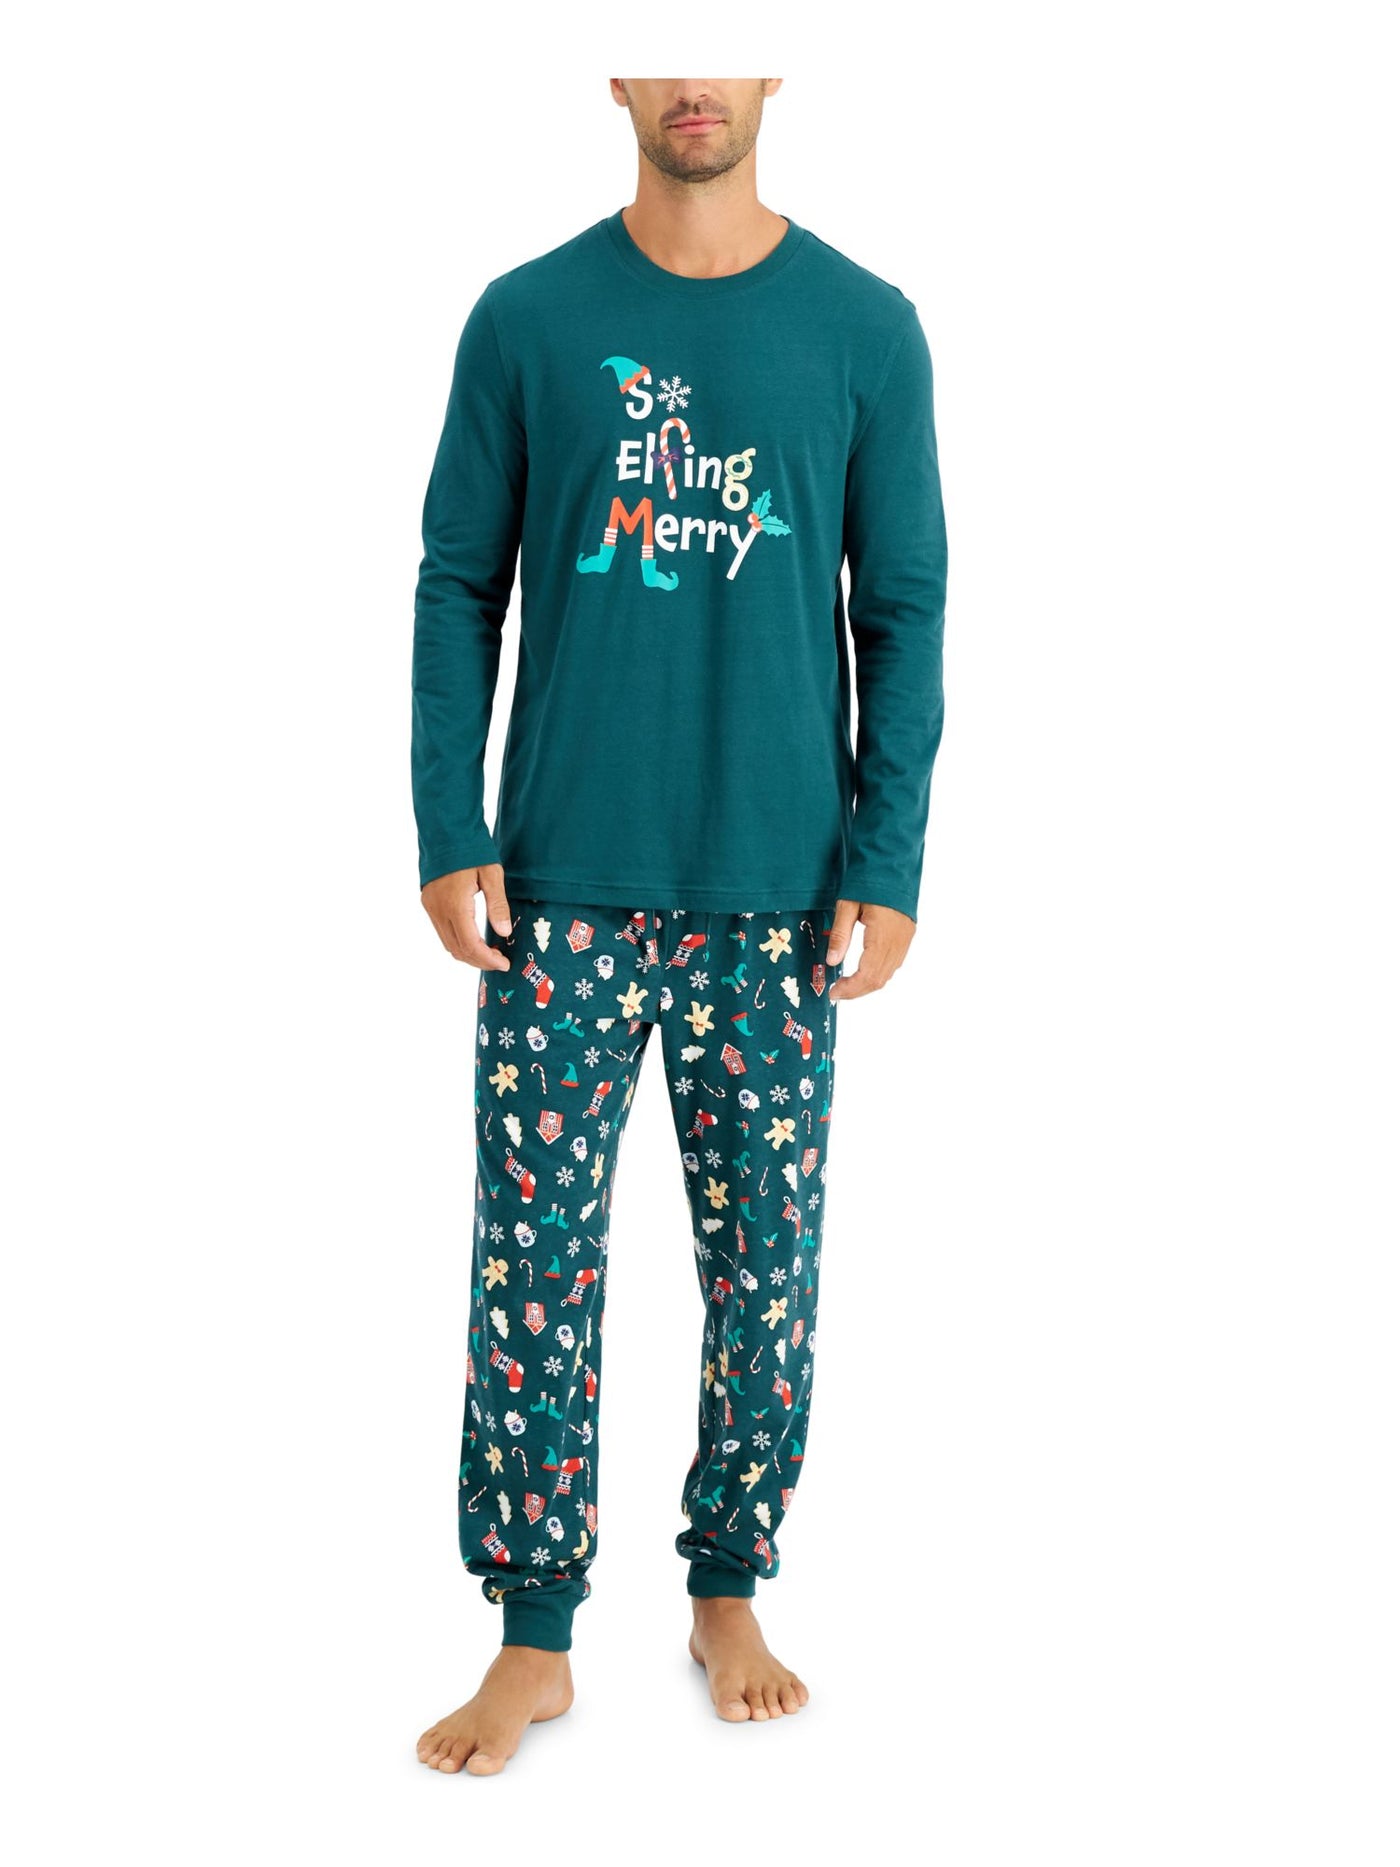 FAMILY PJs Mens So Elfing Merry Green Graphic Drawstring Long Sleeve T-Shirt Top Cuffed Pants Pajamas L